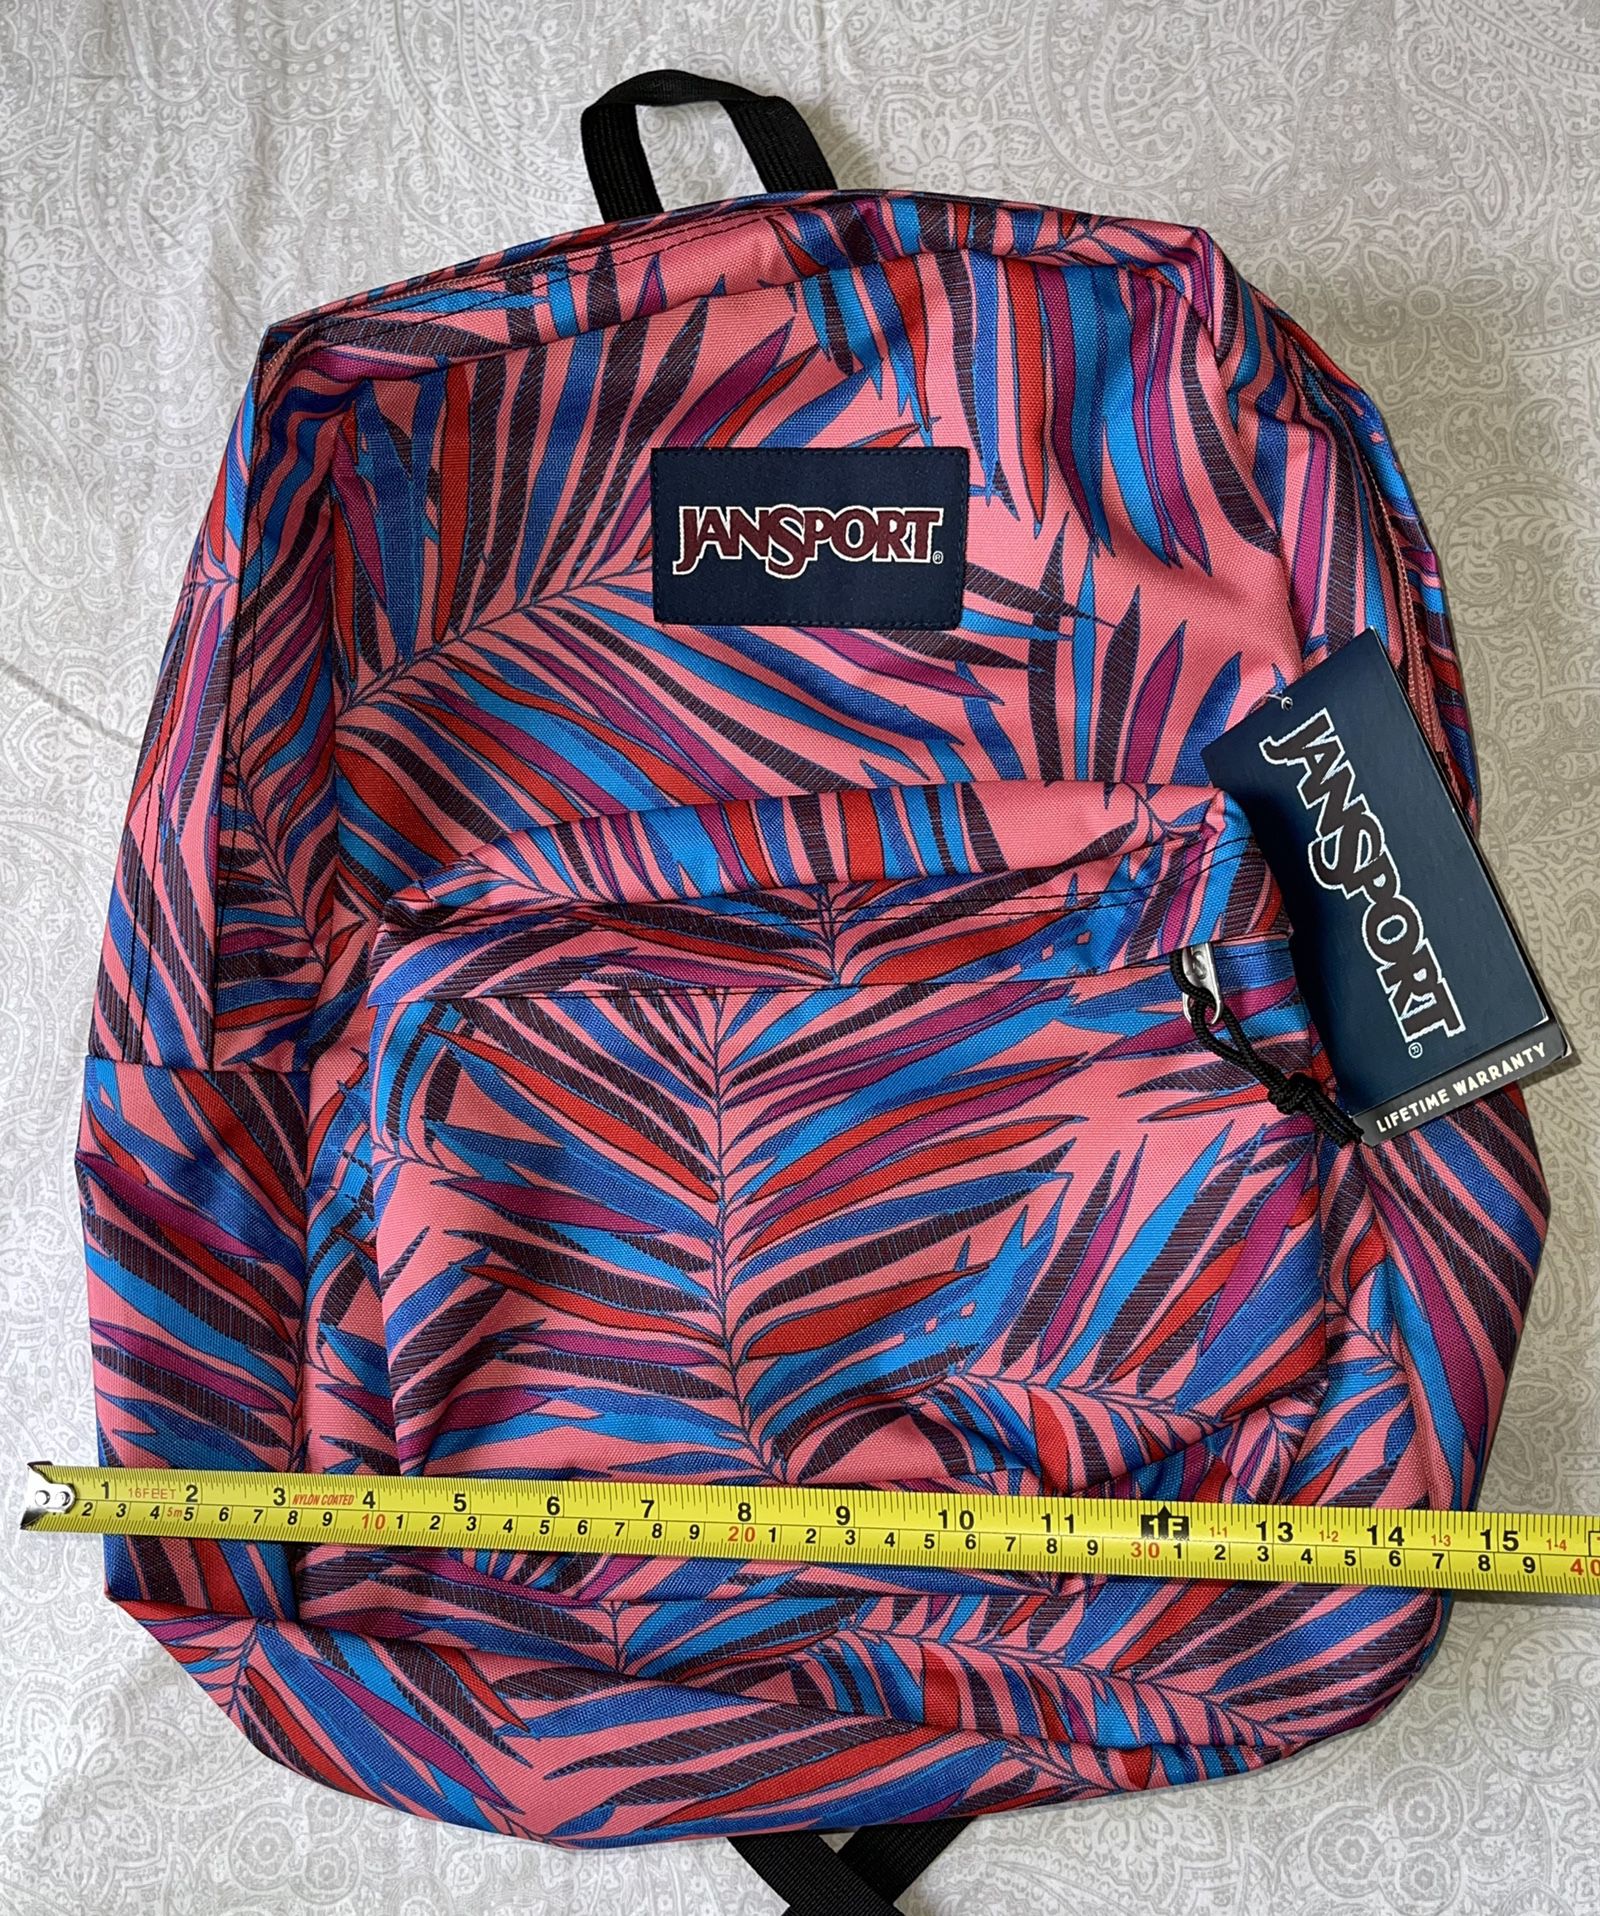 New JanSport Backpack Super break Dotted Palm For School Girls 